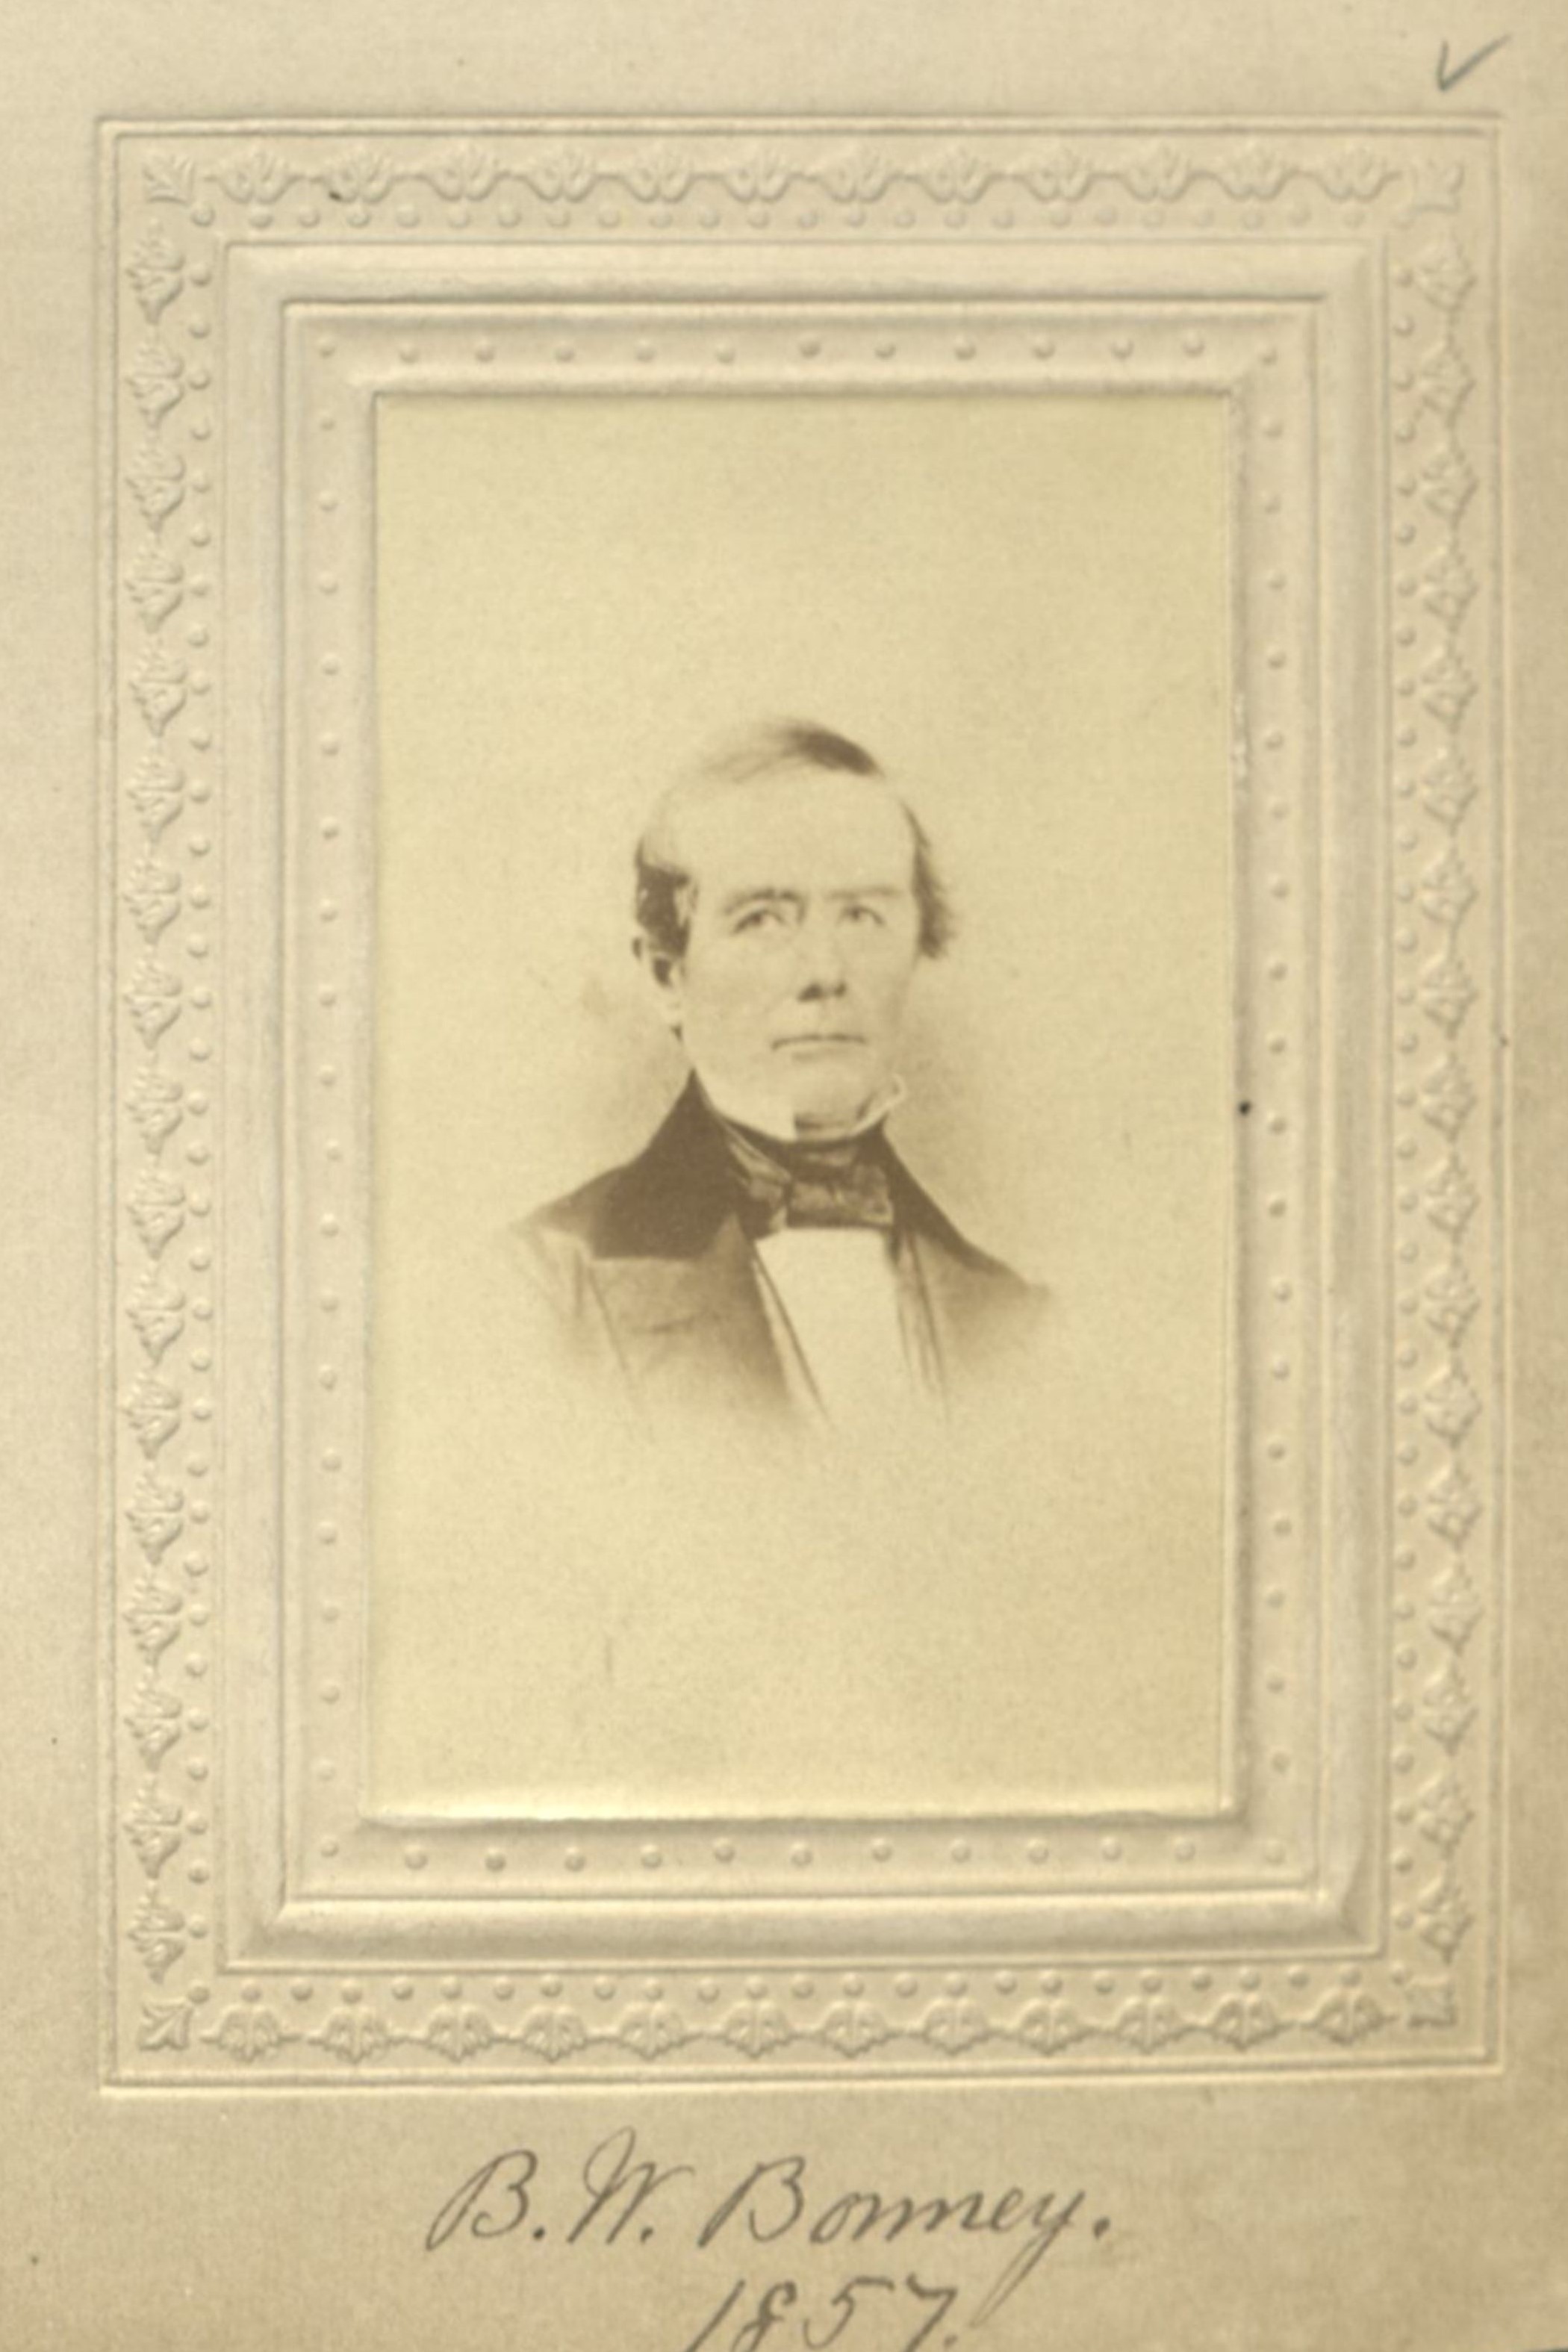 Member portrait of Benjamin W. Bonney